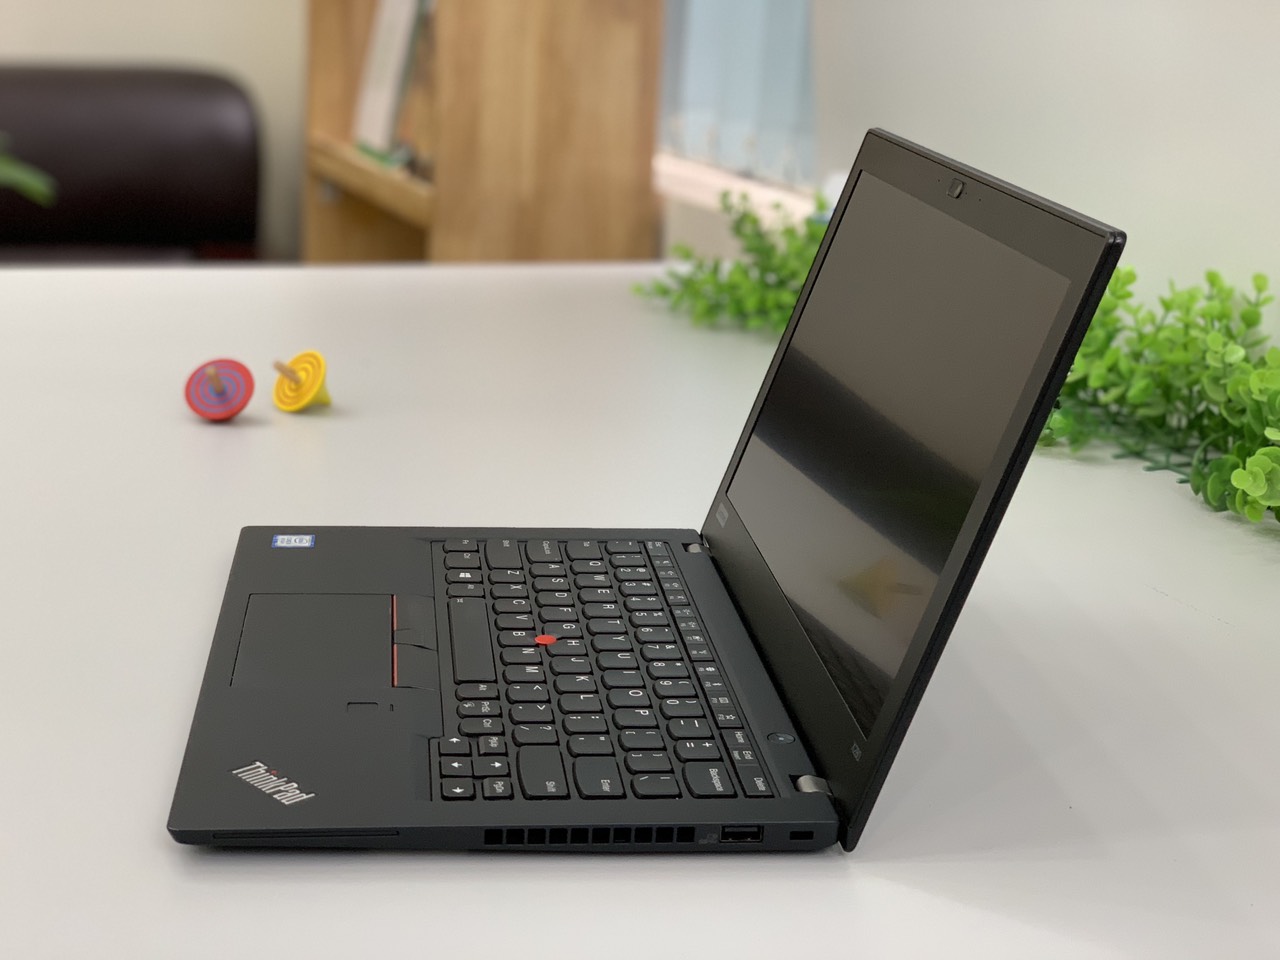 Bán Laptop Lenovo Thinkpad X280 core i5 chính hãng - LaptopAZ.vn